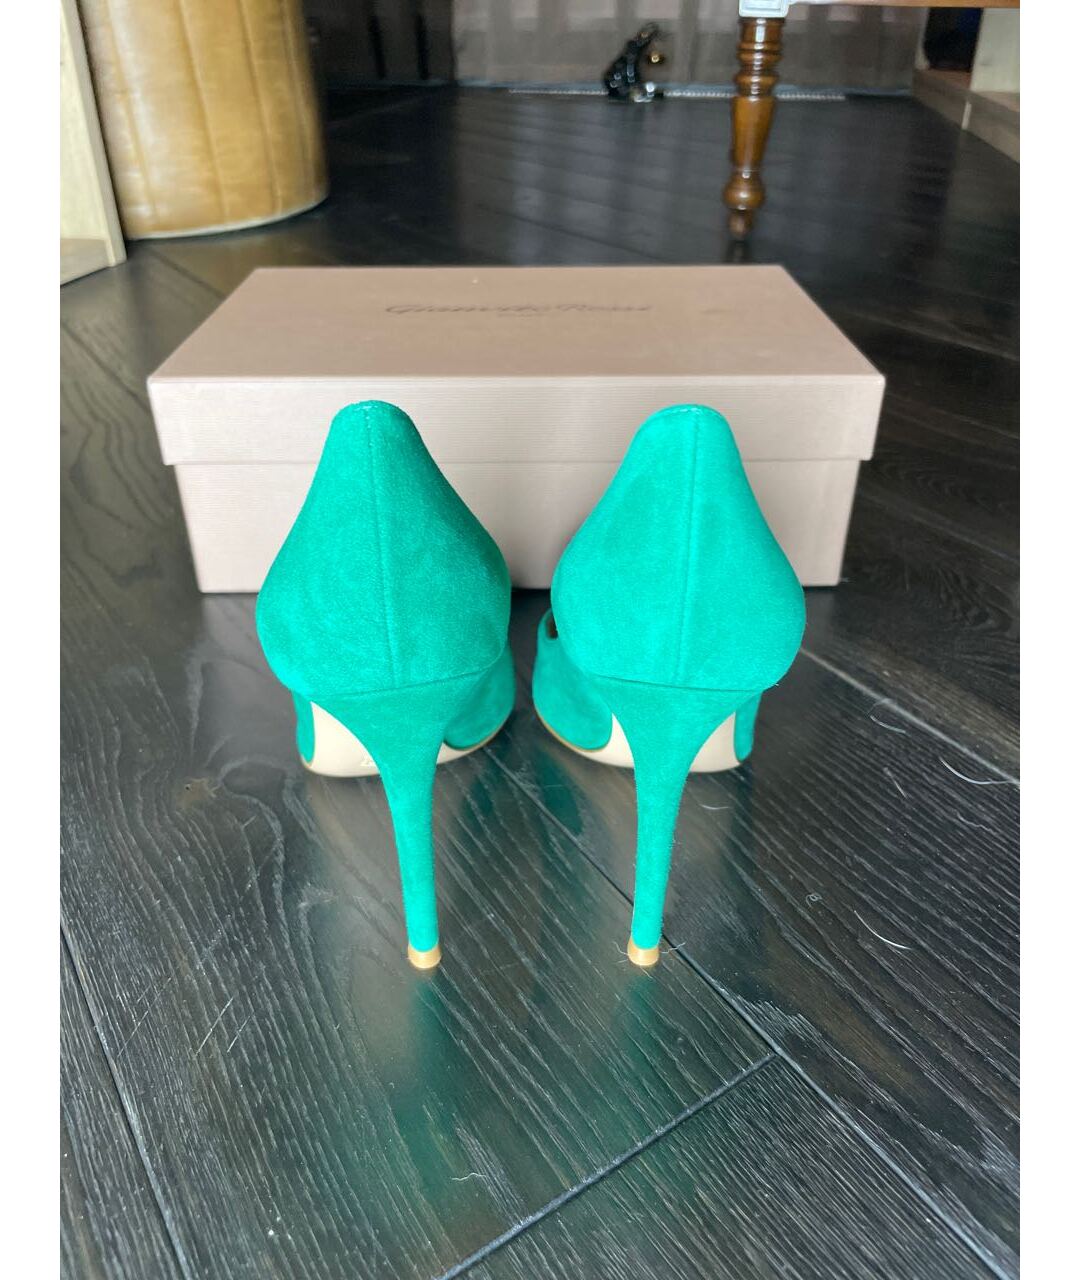 GIANVITO ROSSI Зеленые замшевые туфли, фото 4